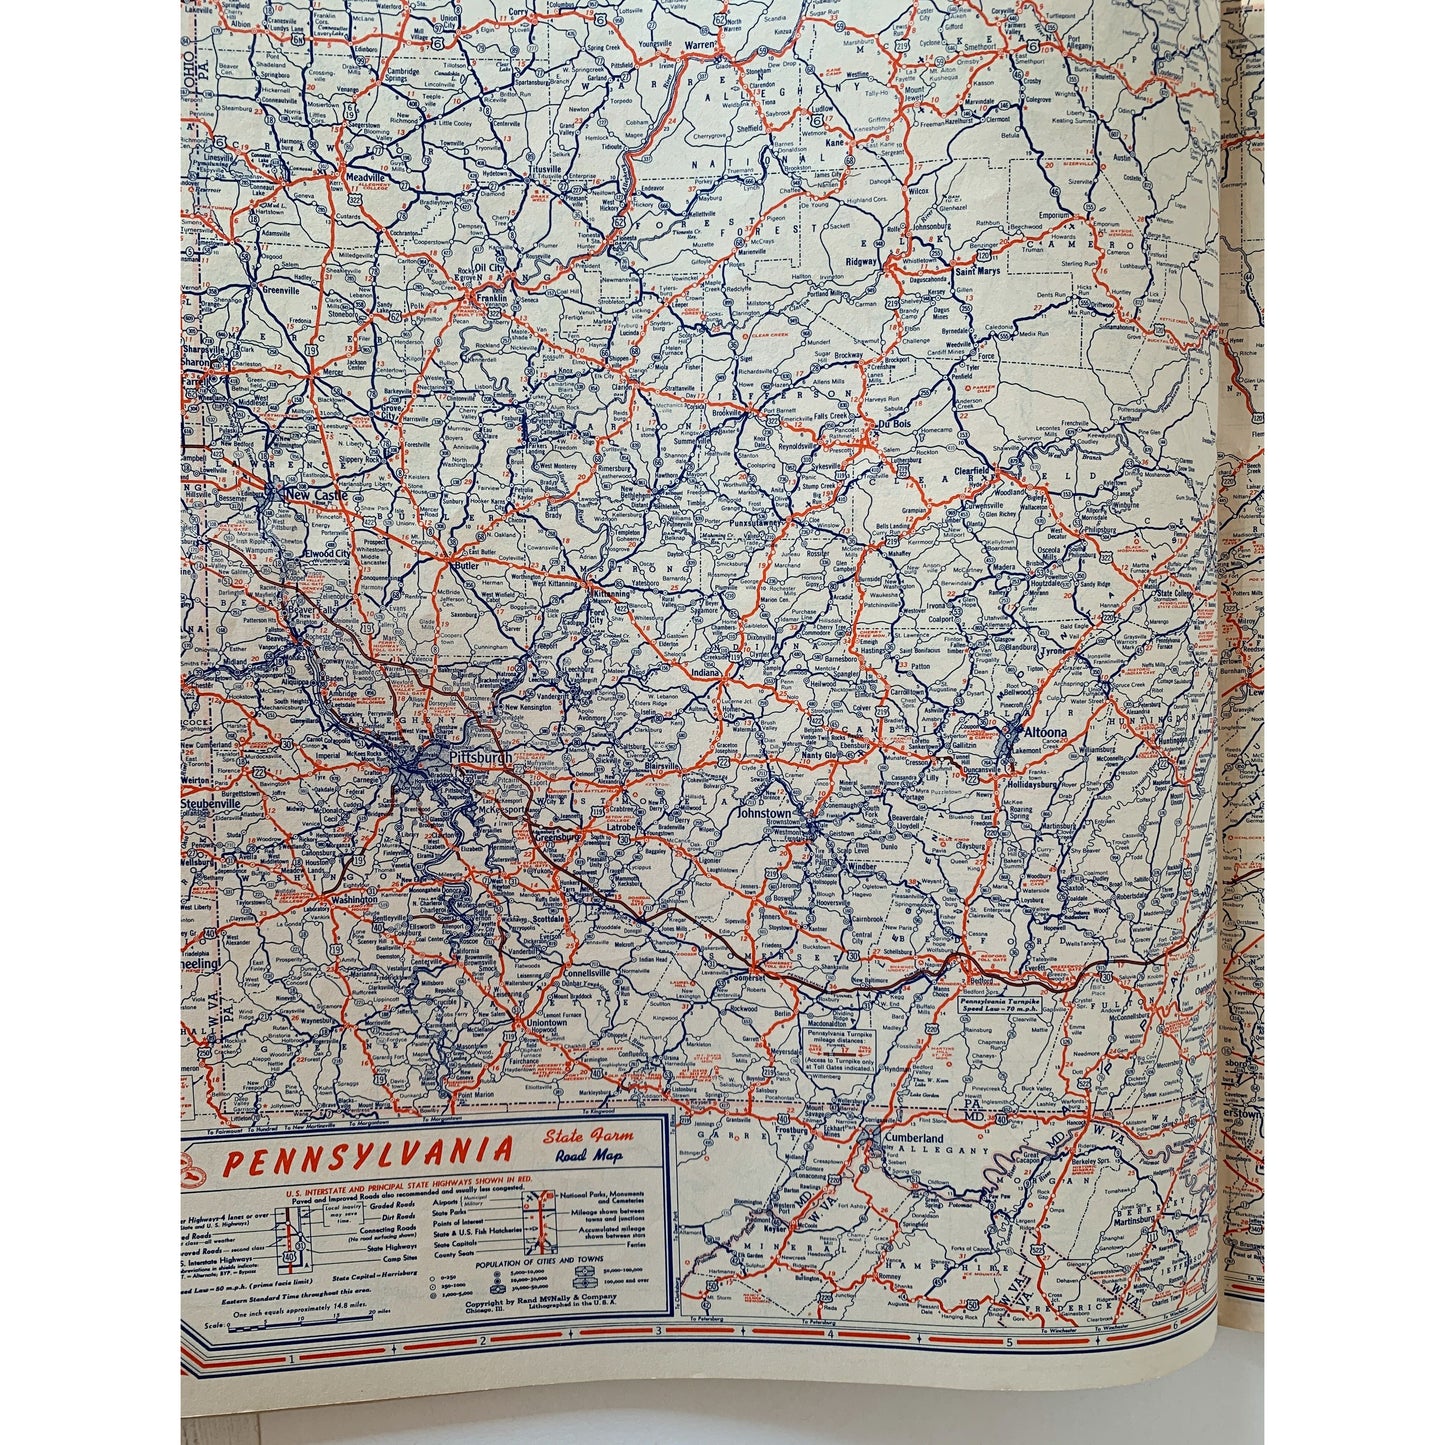 State Farm Road Atlas, 1952, Fun Mid Century Modern Illustrations